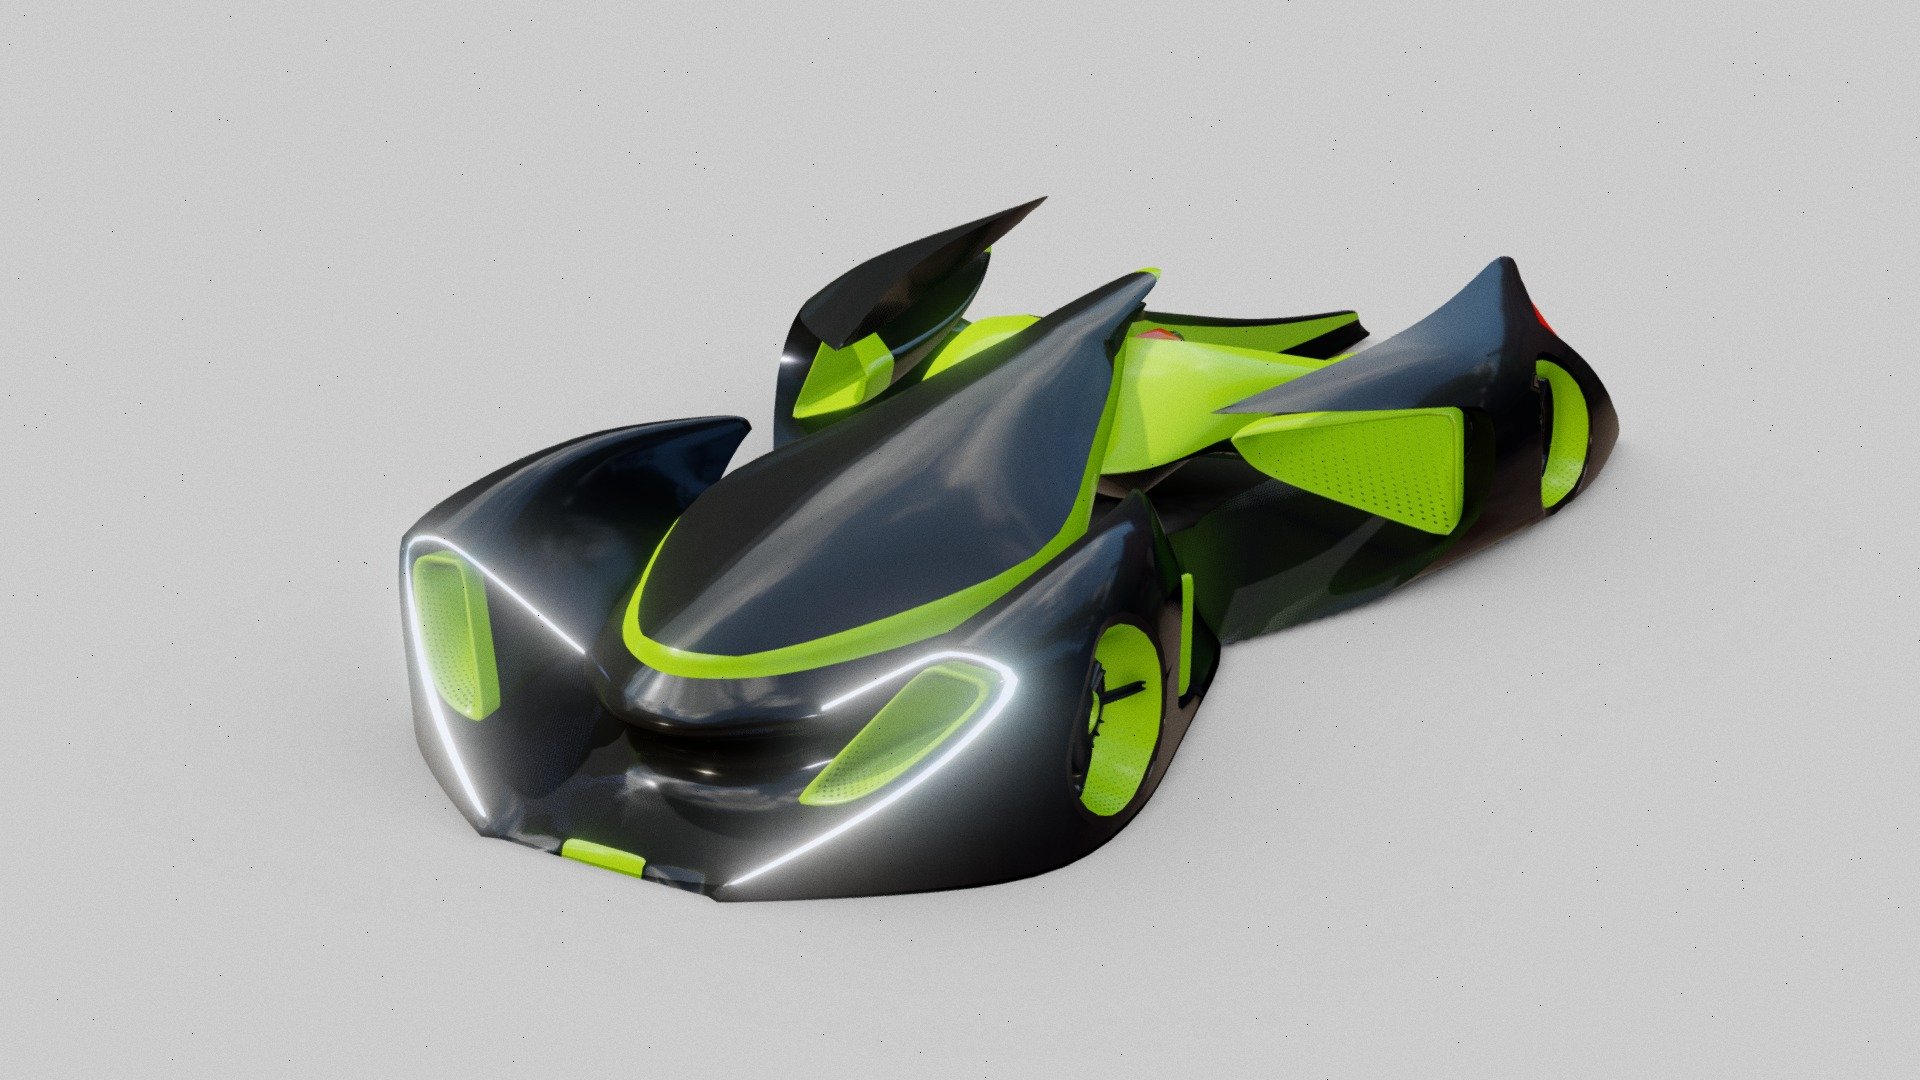 A midpoly model of a sci-fi concept car designed by R. Sharma - Concept Car - 3D model by iSteven (@OneSteven) 3d model